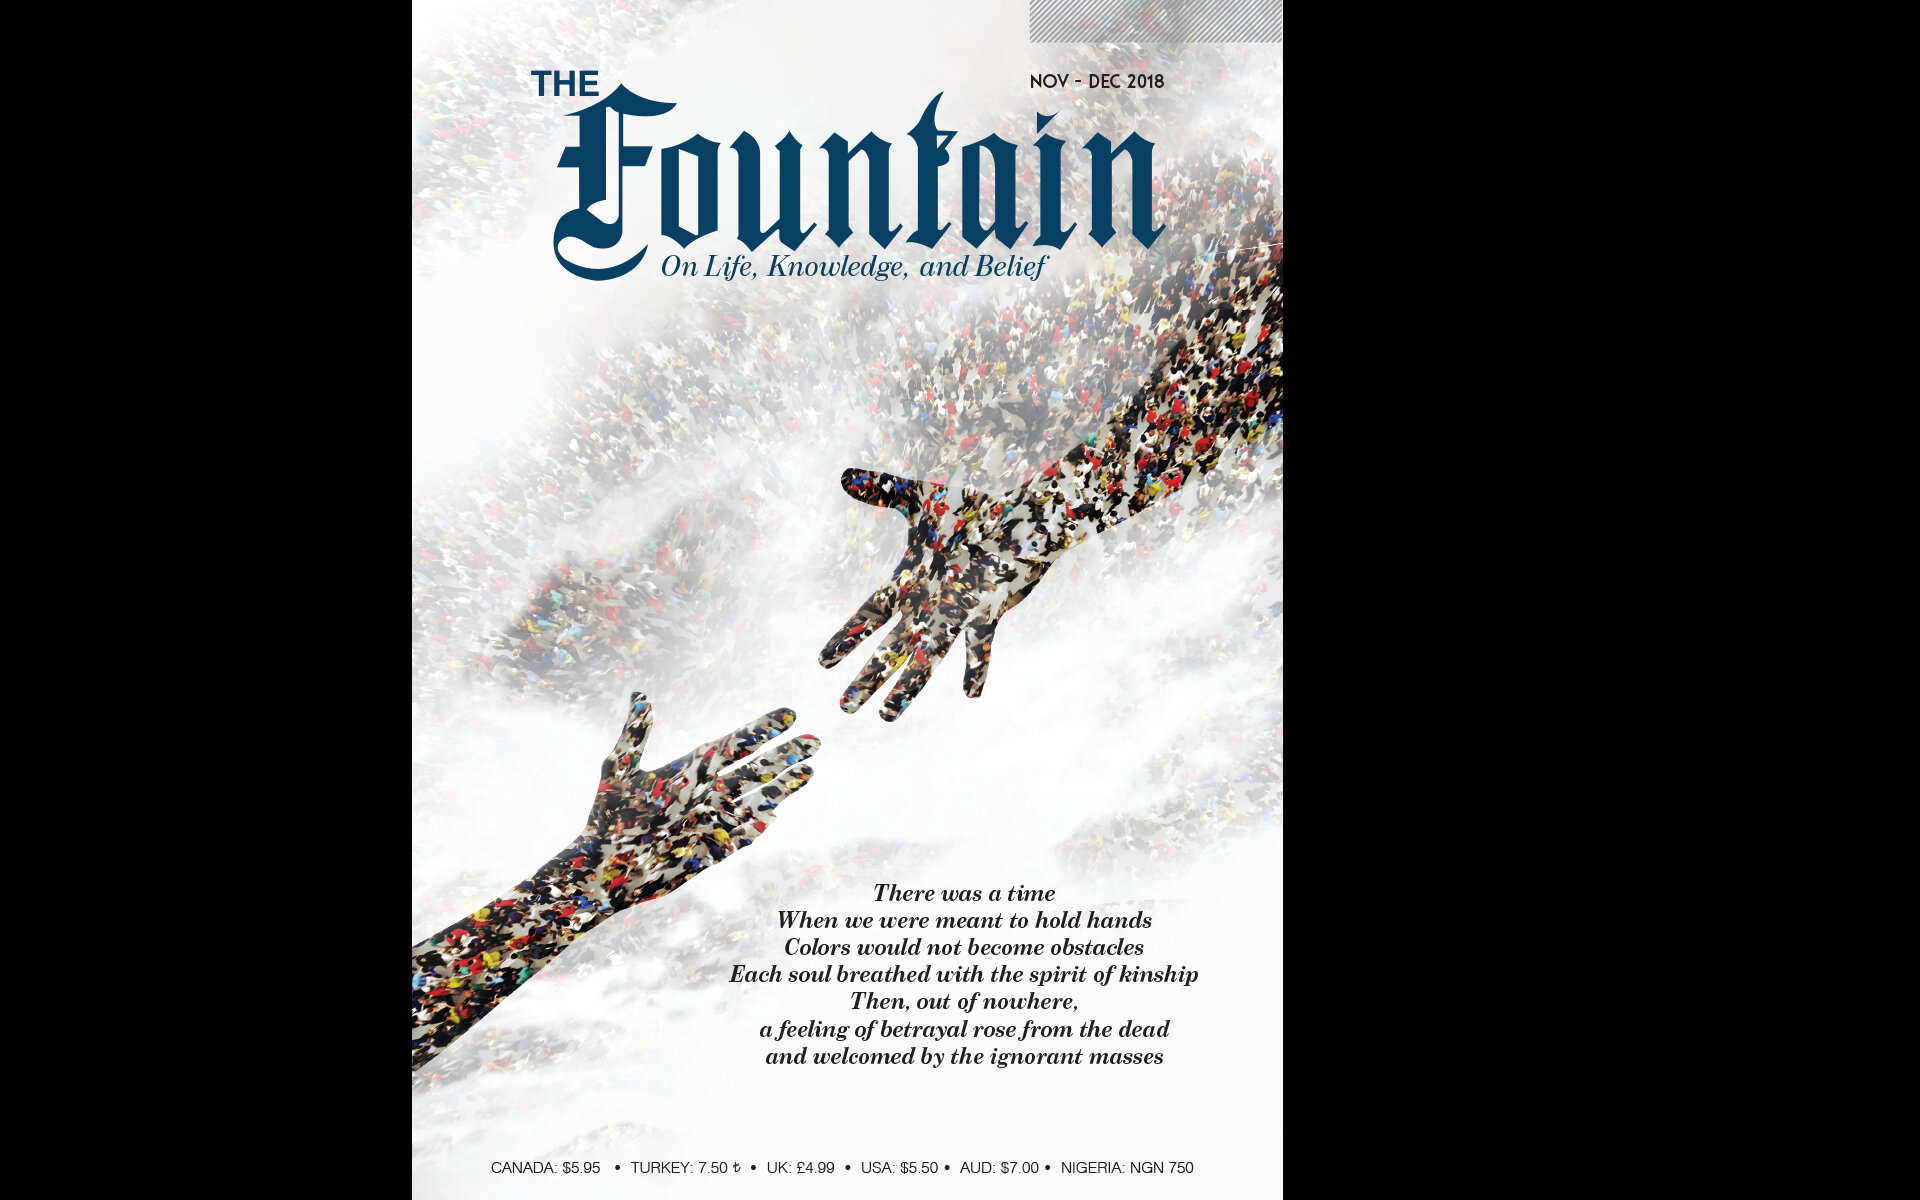 The Fountain Issue 126 (Nov - Dec 2018) Cover